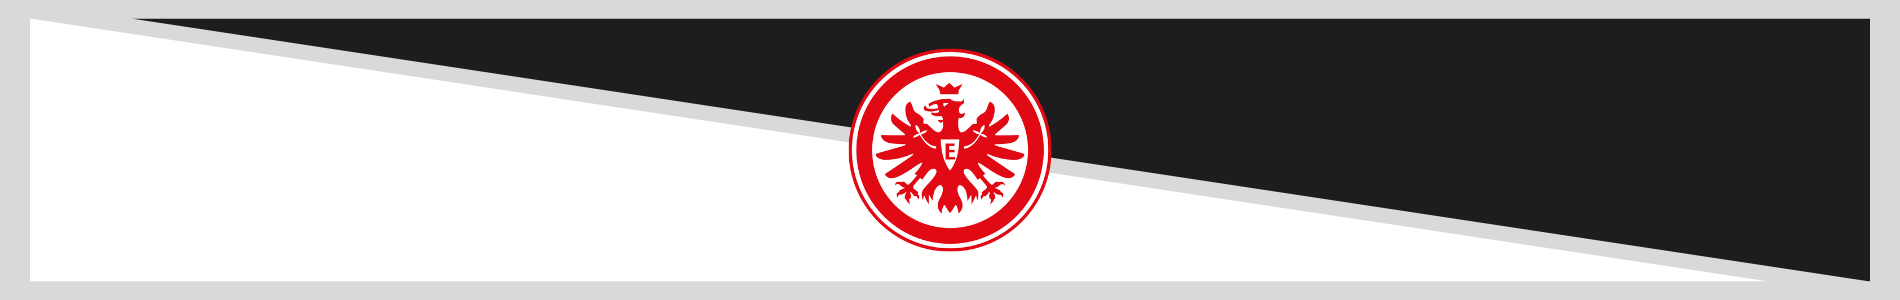 banner maillot de foot frankfurtbanner maillot de foot frankfurt